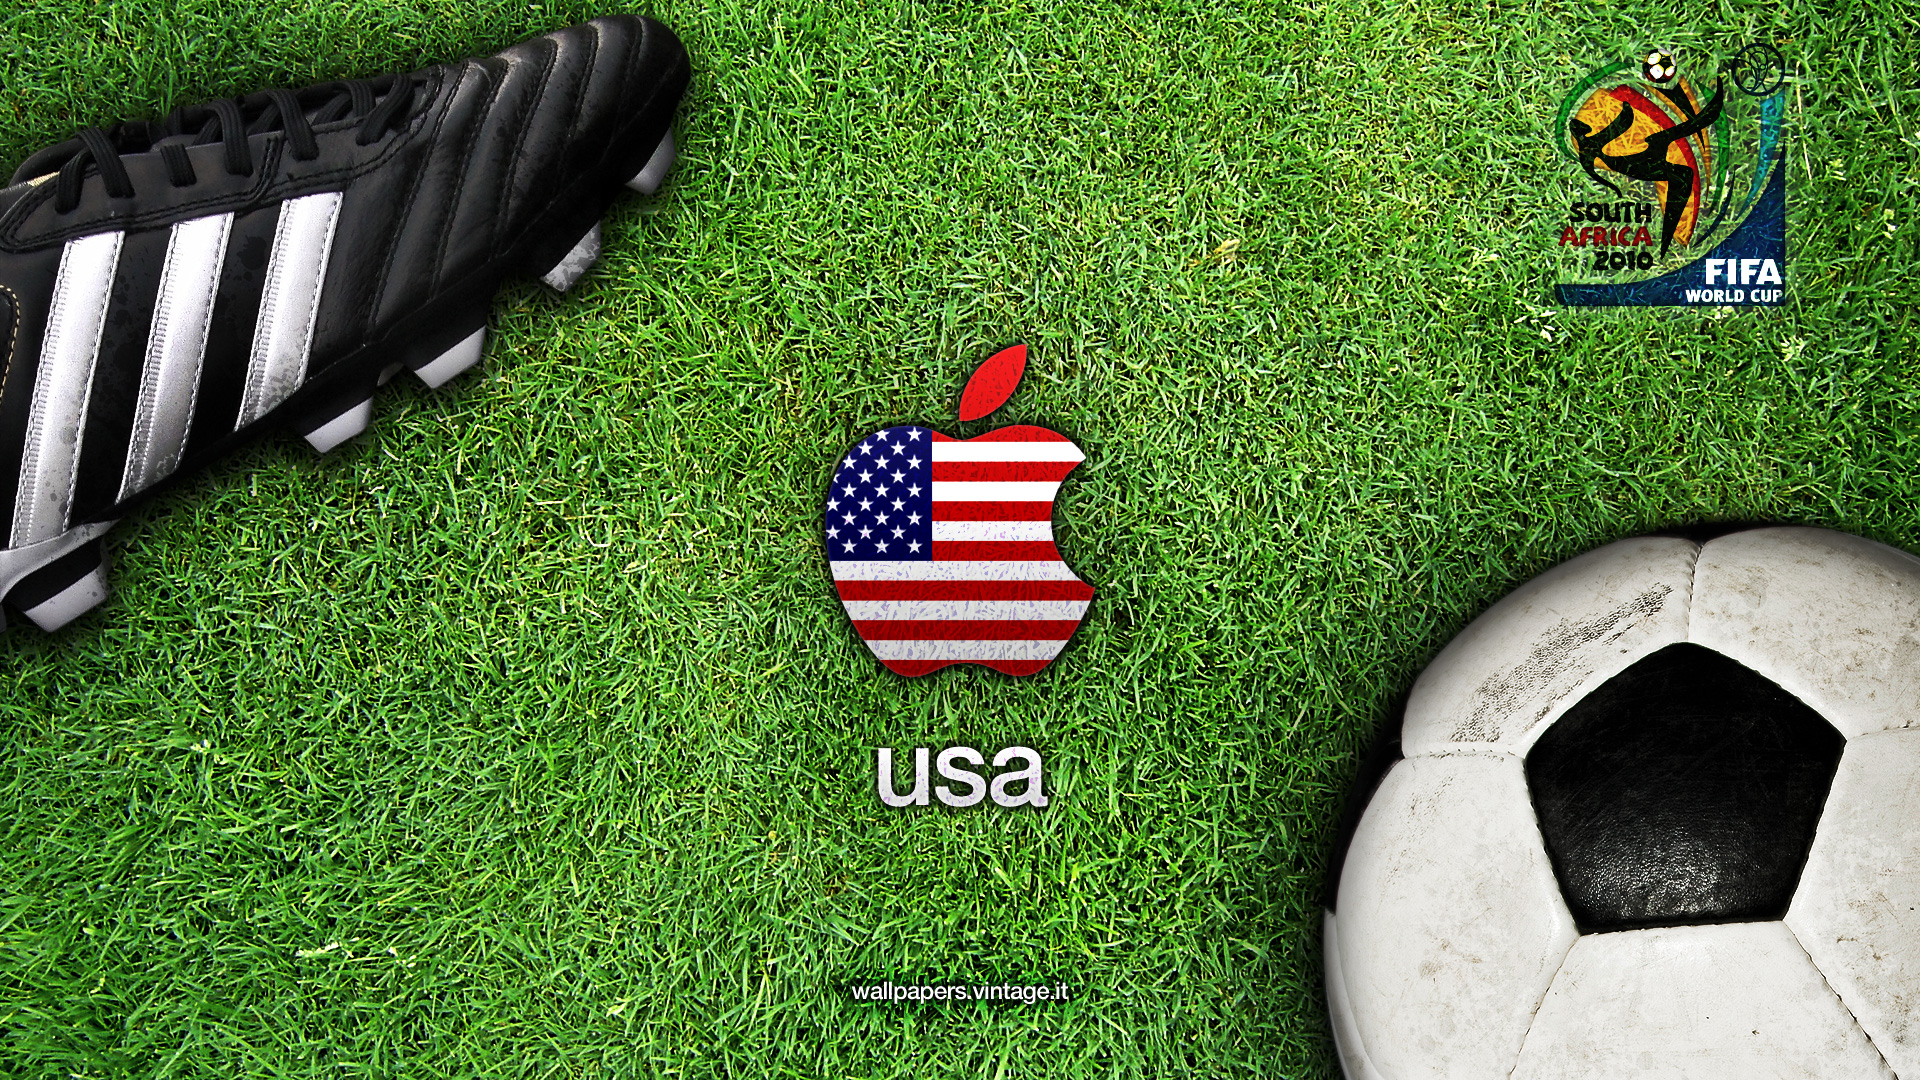 USA Fifa World Cup wallpaper - Free Desktop HD iPad iPhone wallpapers